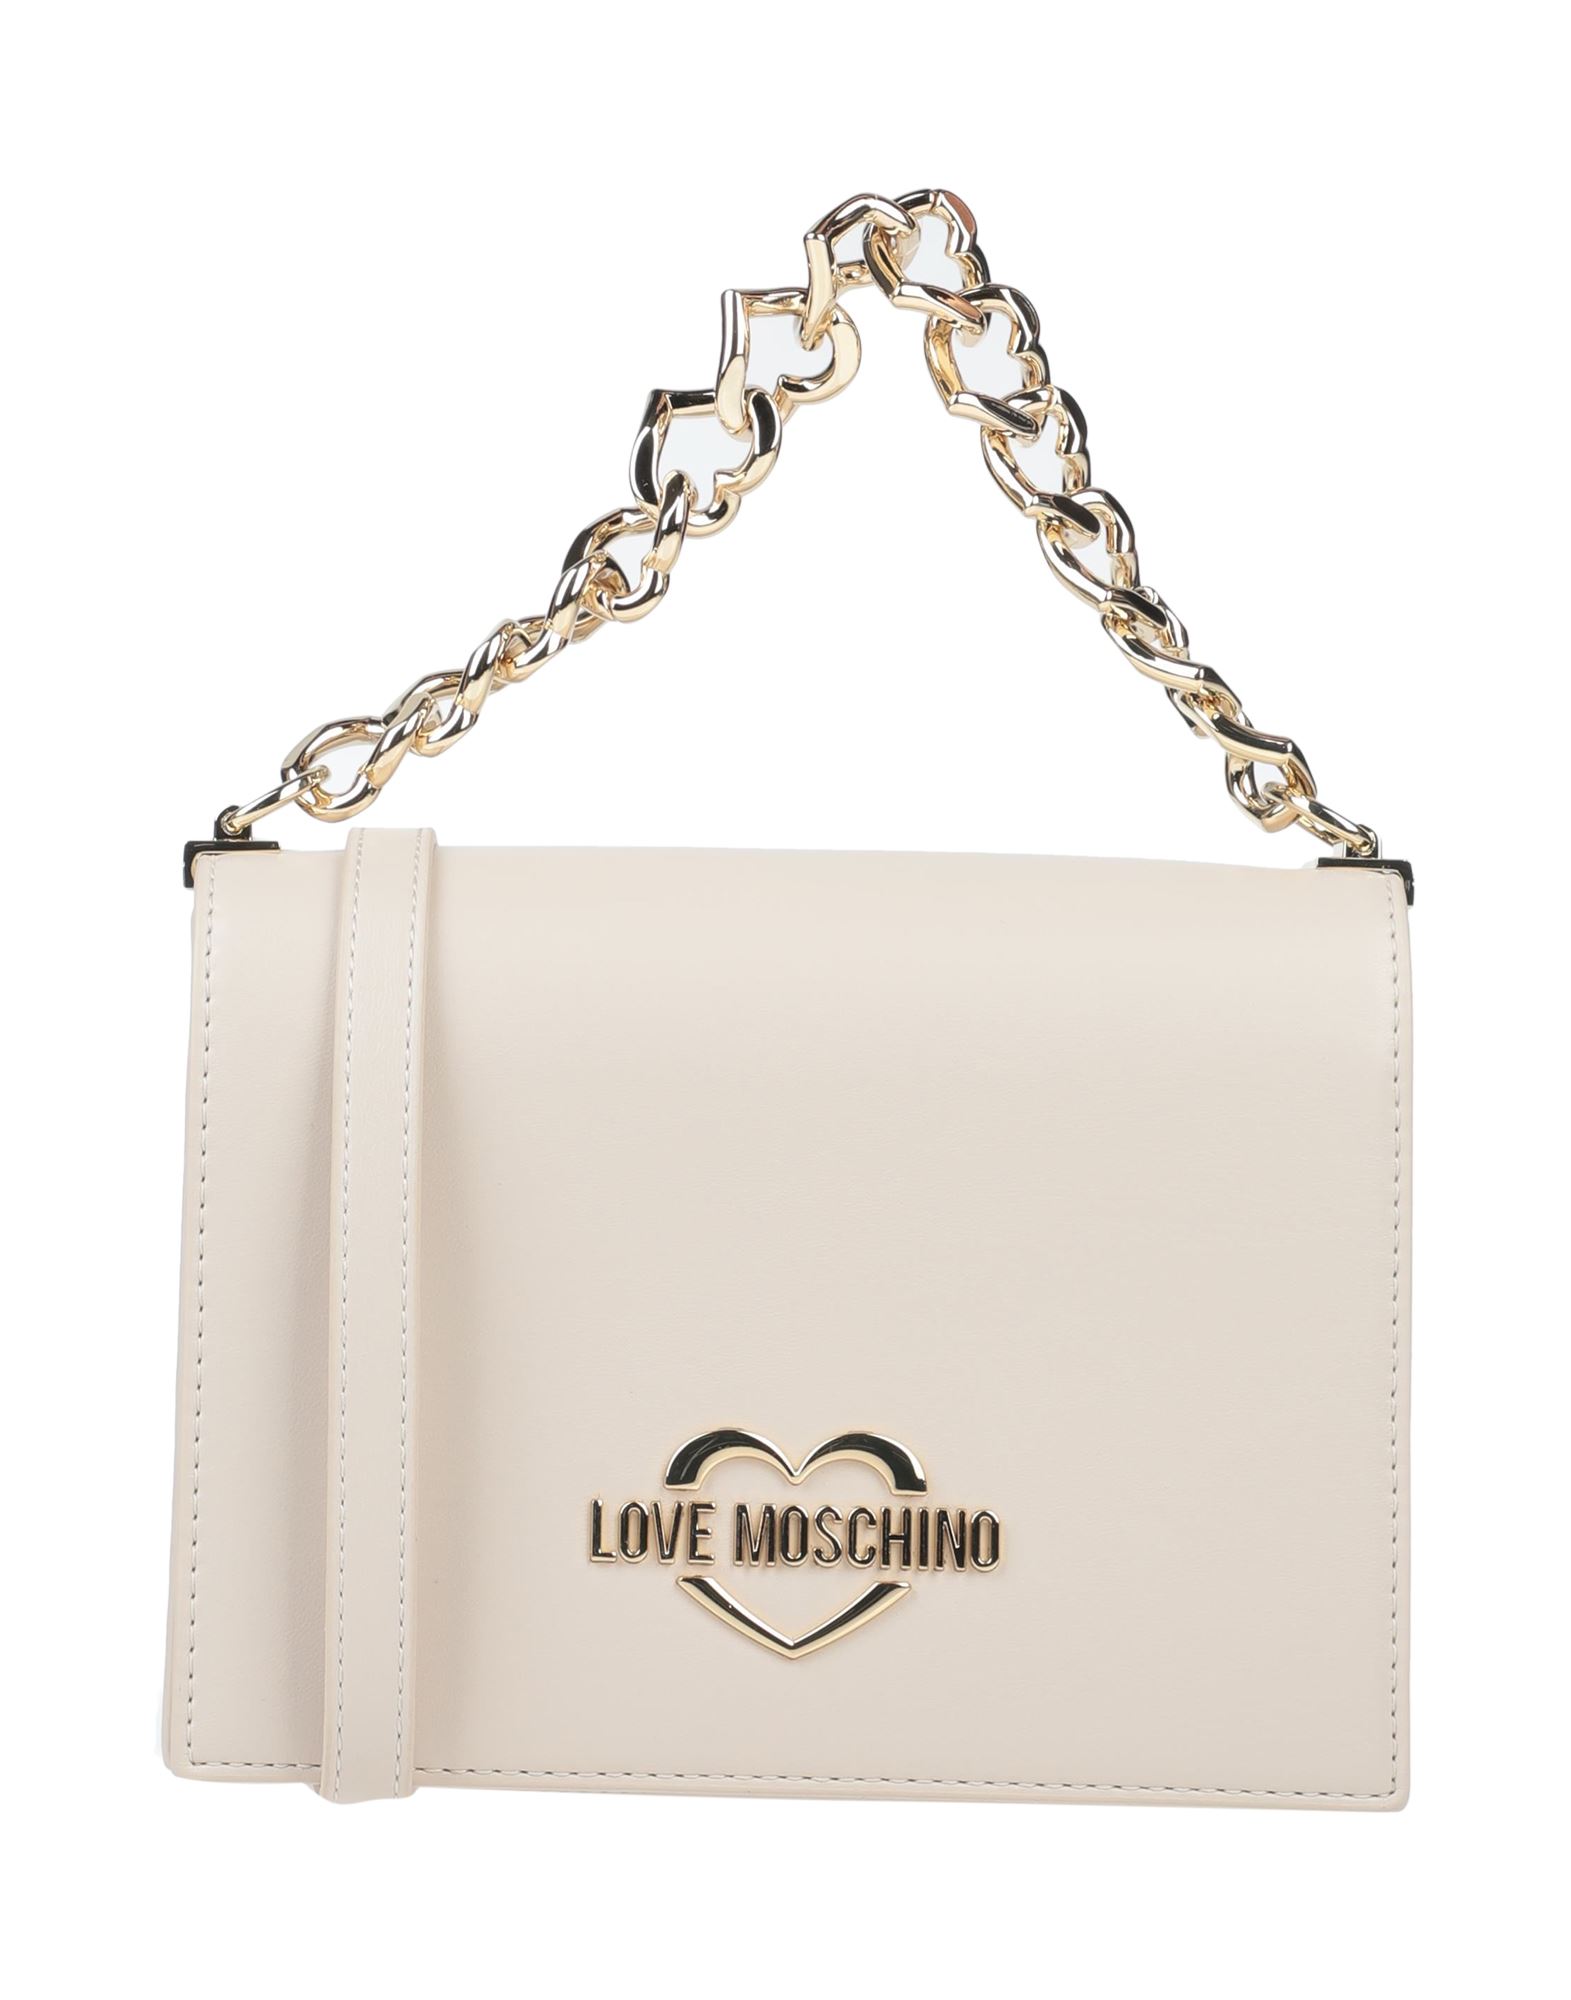 LOVE MOSCHINO Handbags - Item 45553188